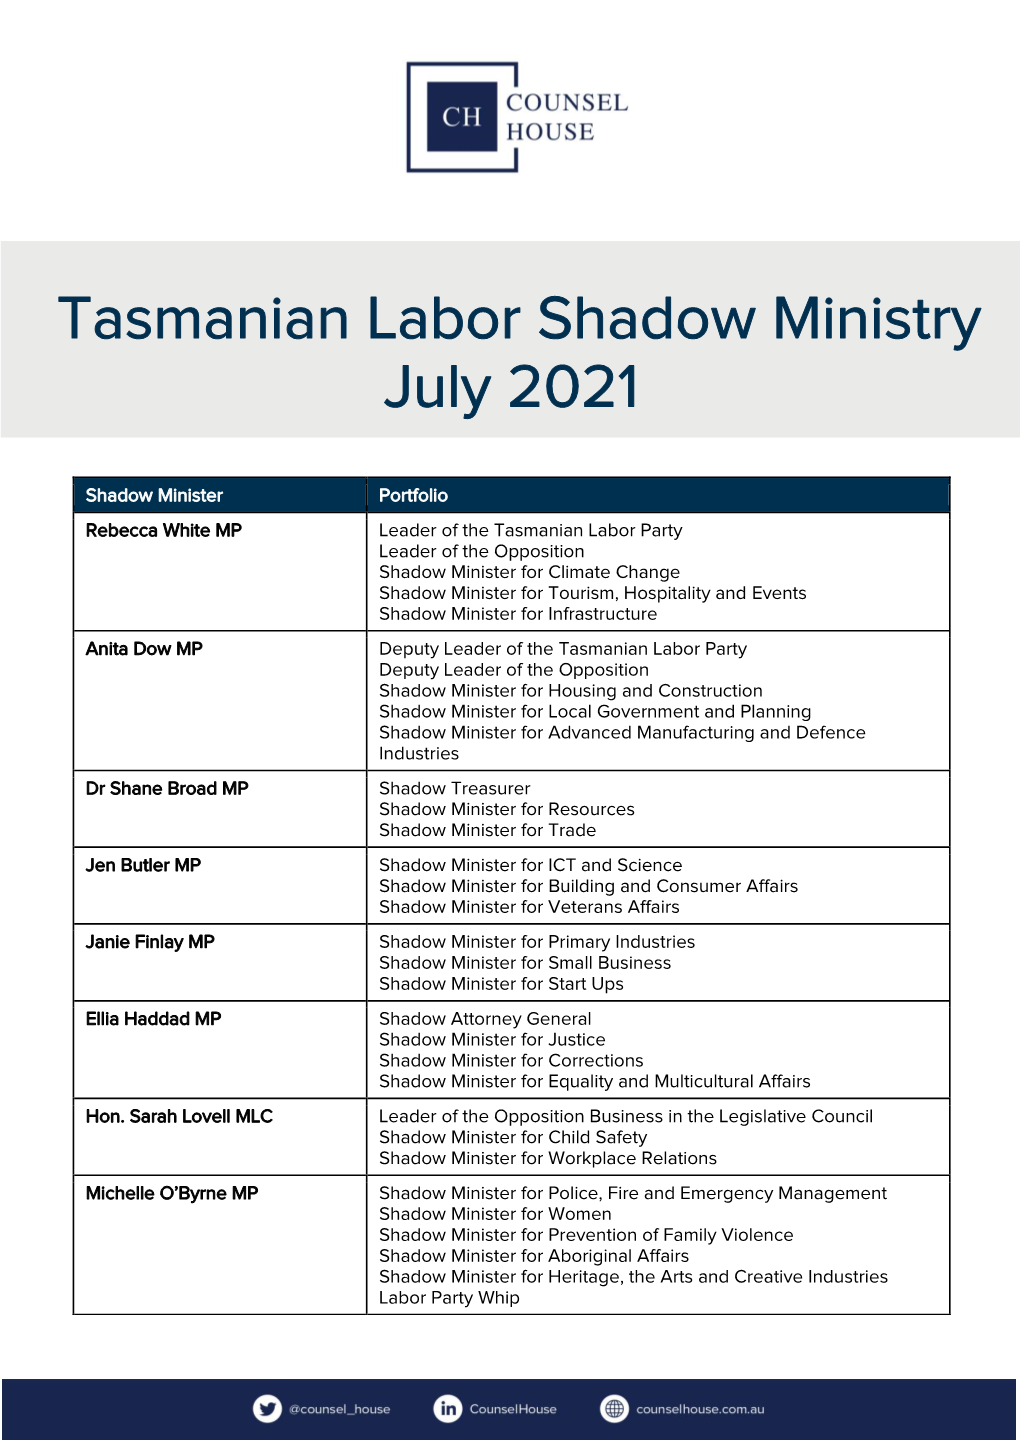 Tasmanian Labor Shadow Ministry July 2021